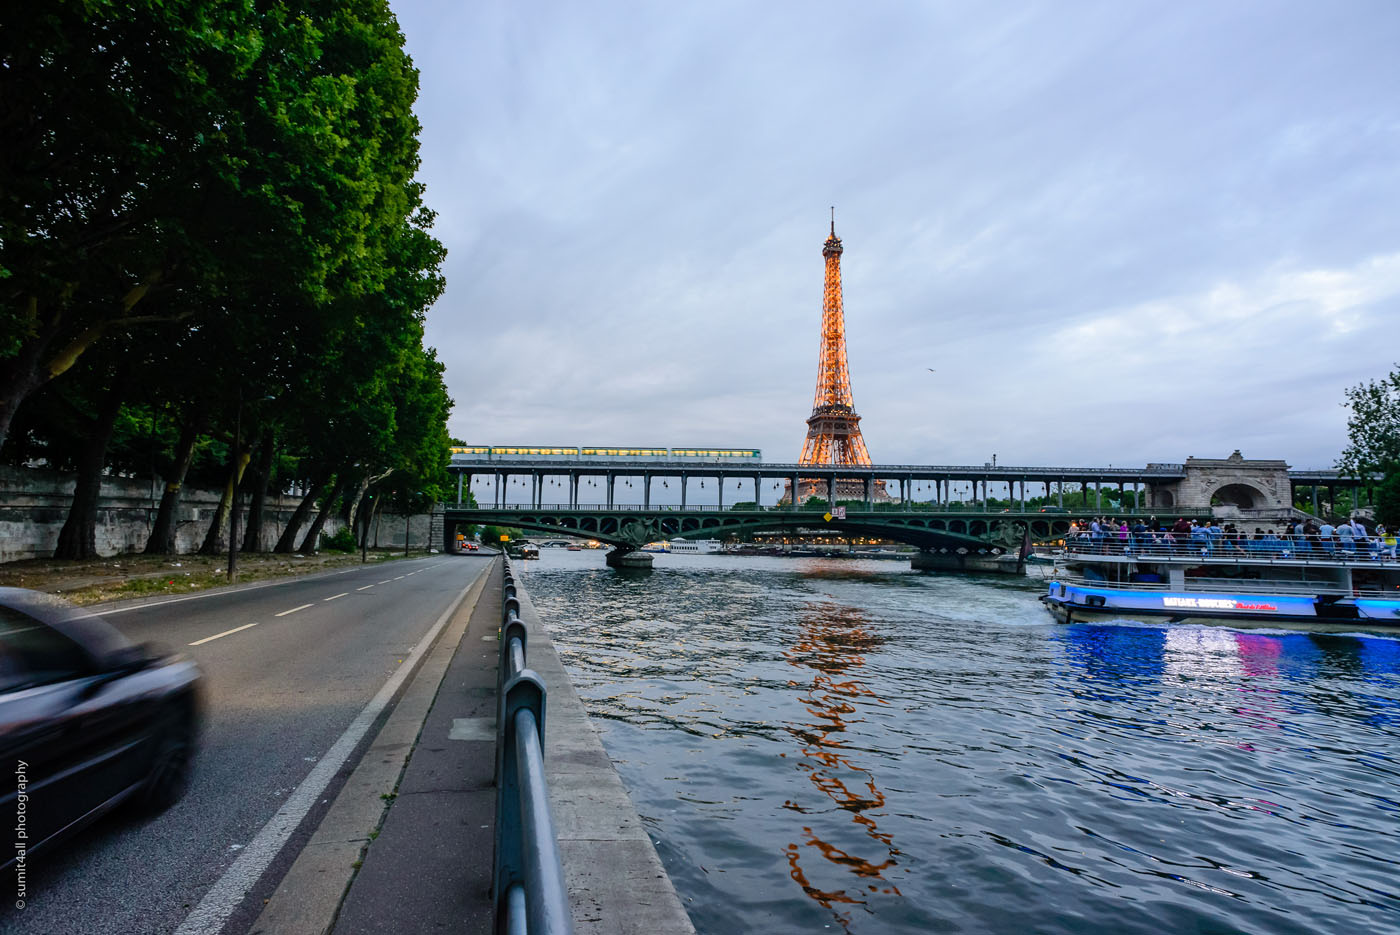 Paris Scene with Eiffel Tower